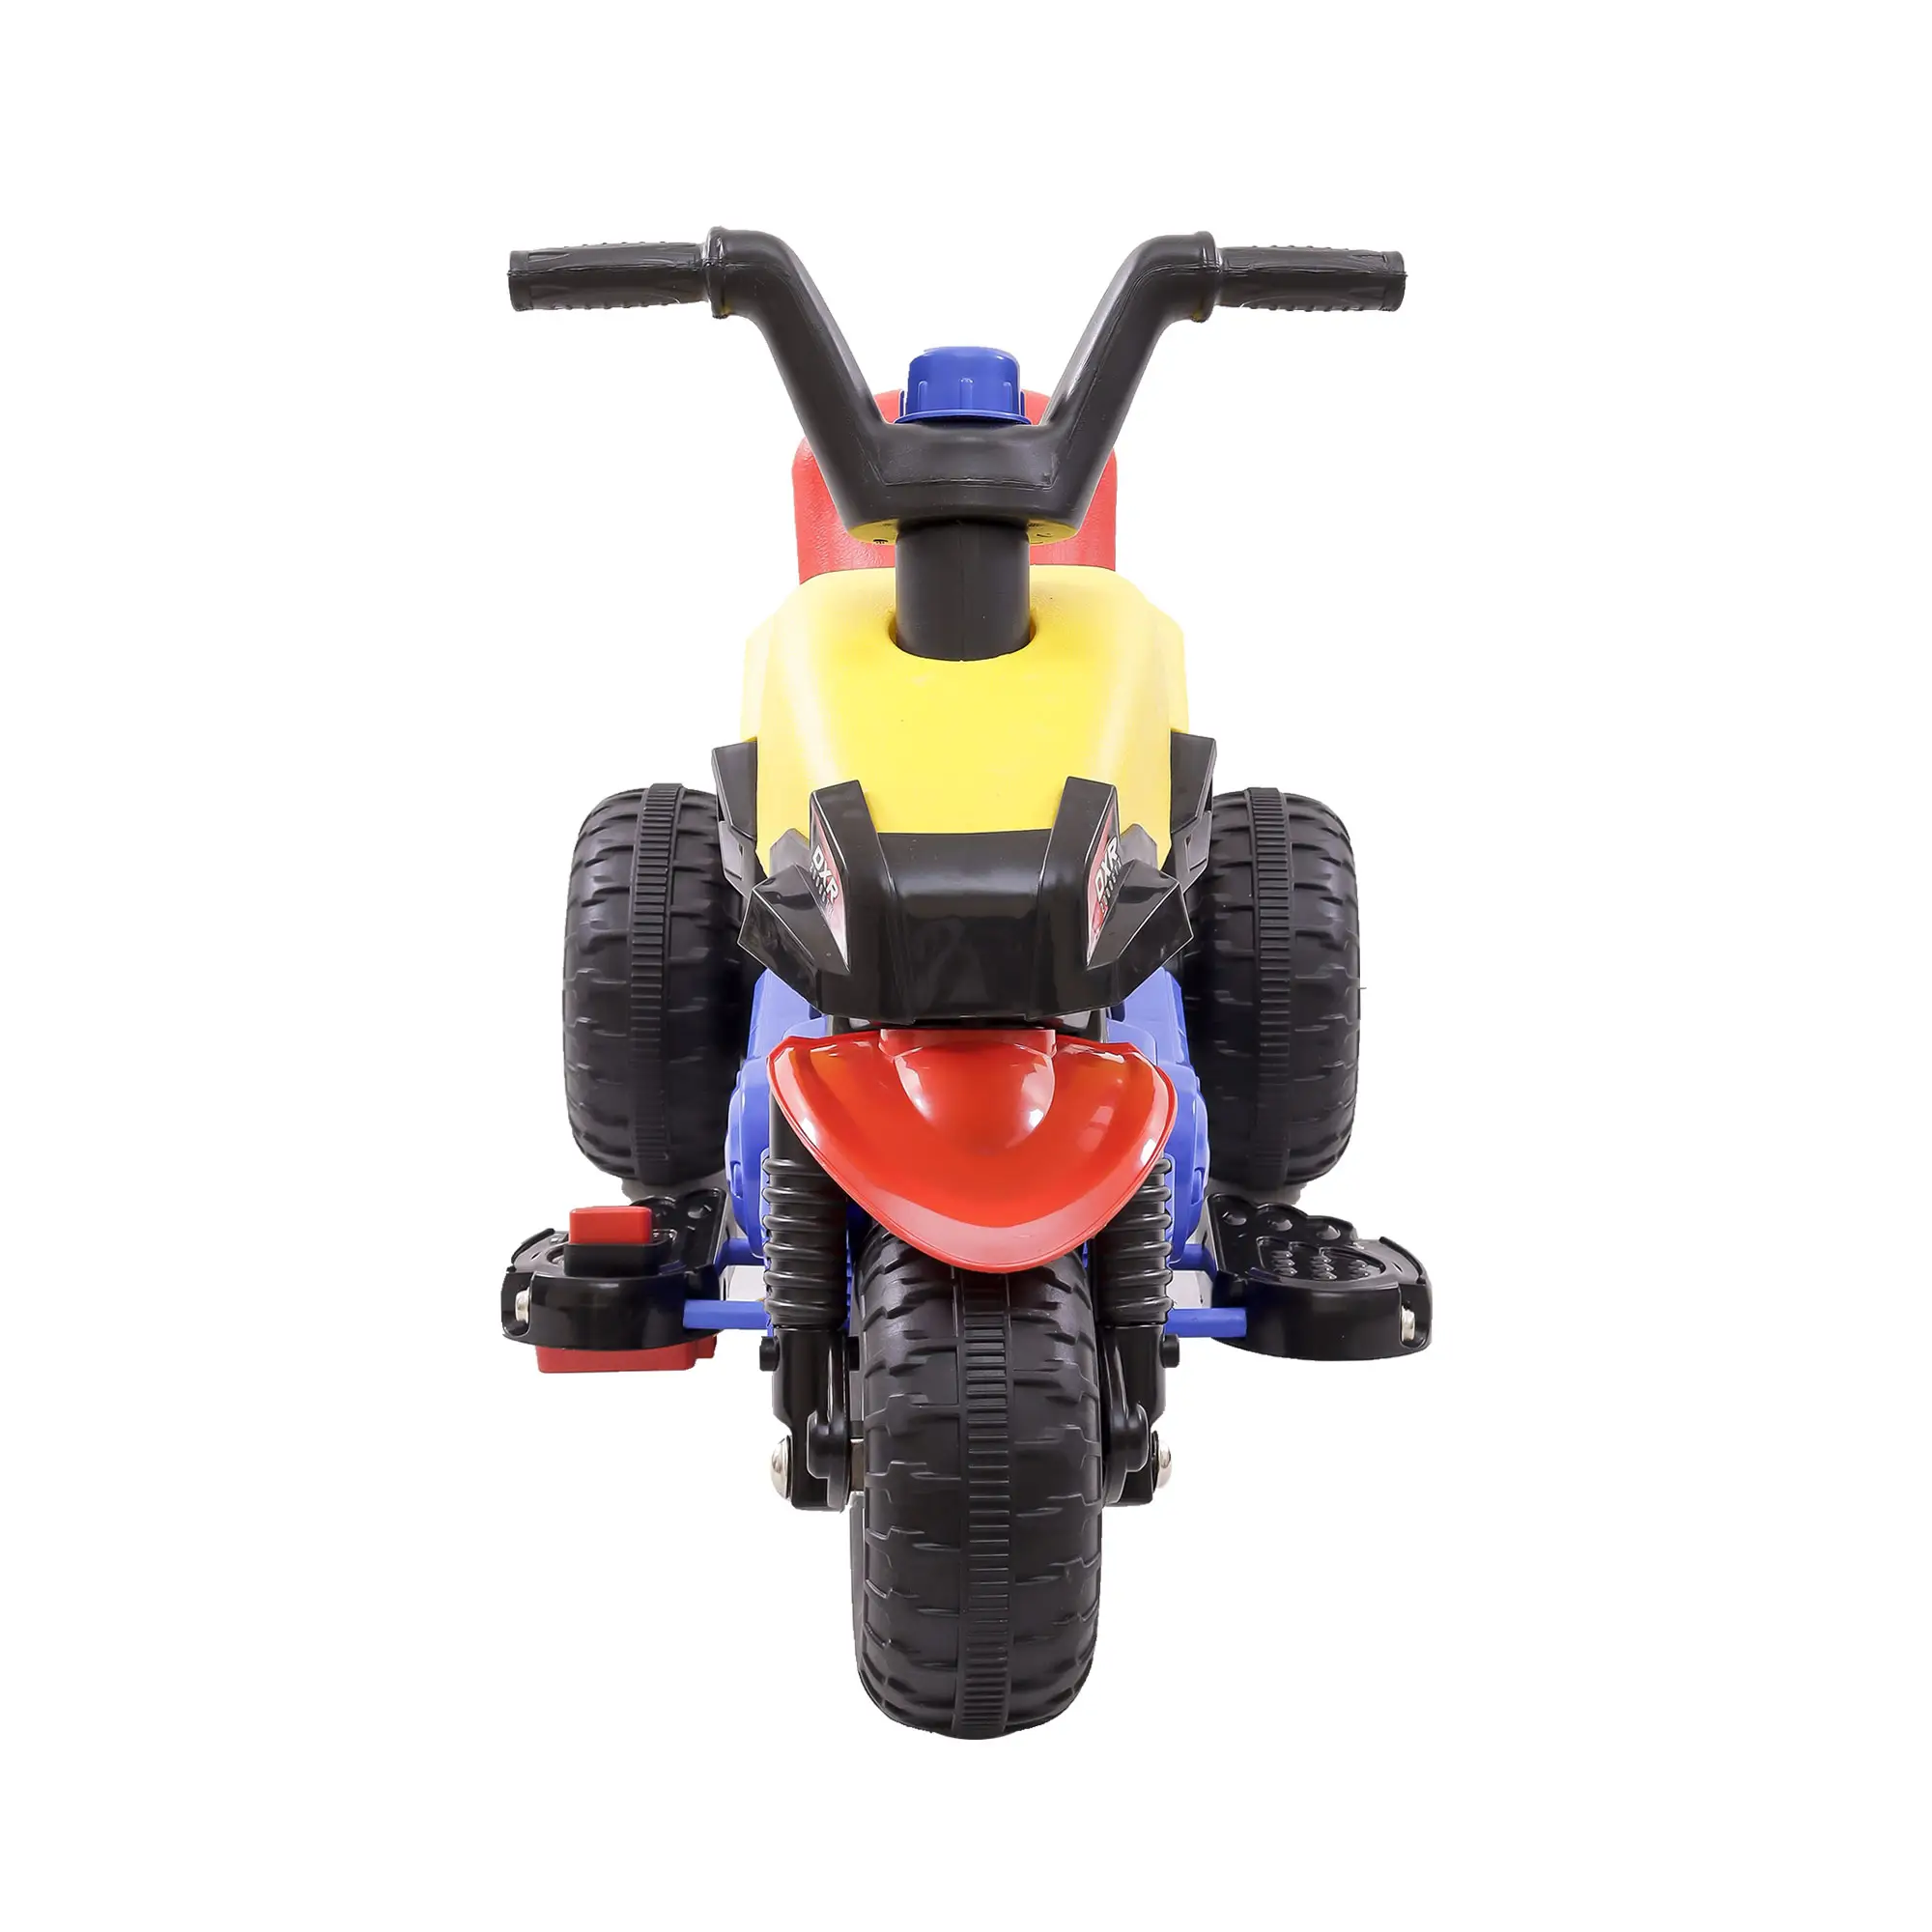 Mobil Abs mainan penggunaan anak uniseks, grosir buah gaya karton DXR sepeda motor listrik anak-anak Indonesia